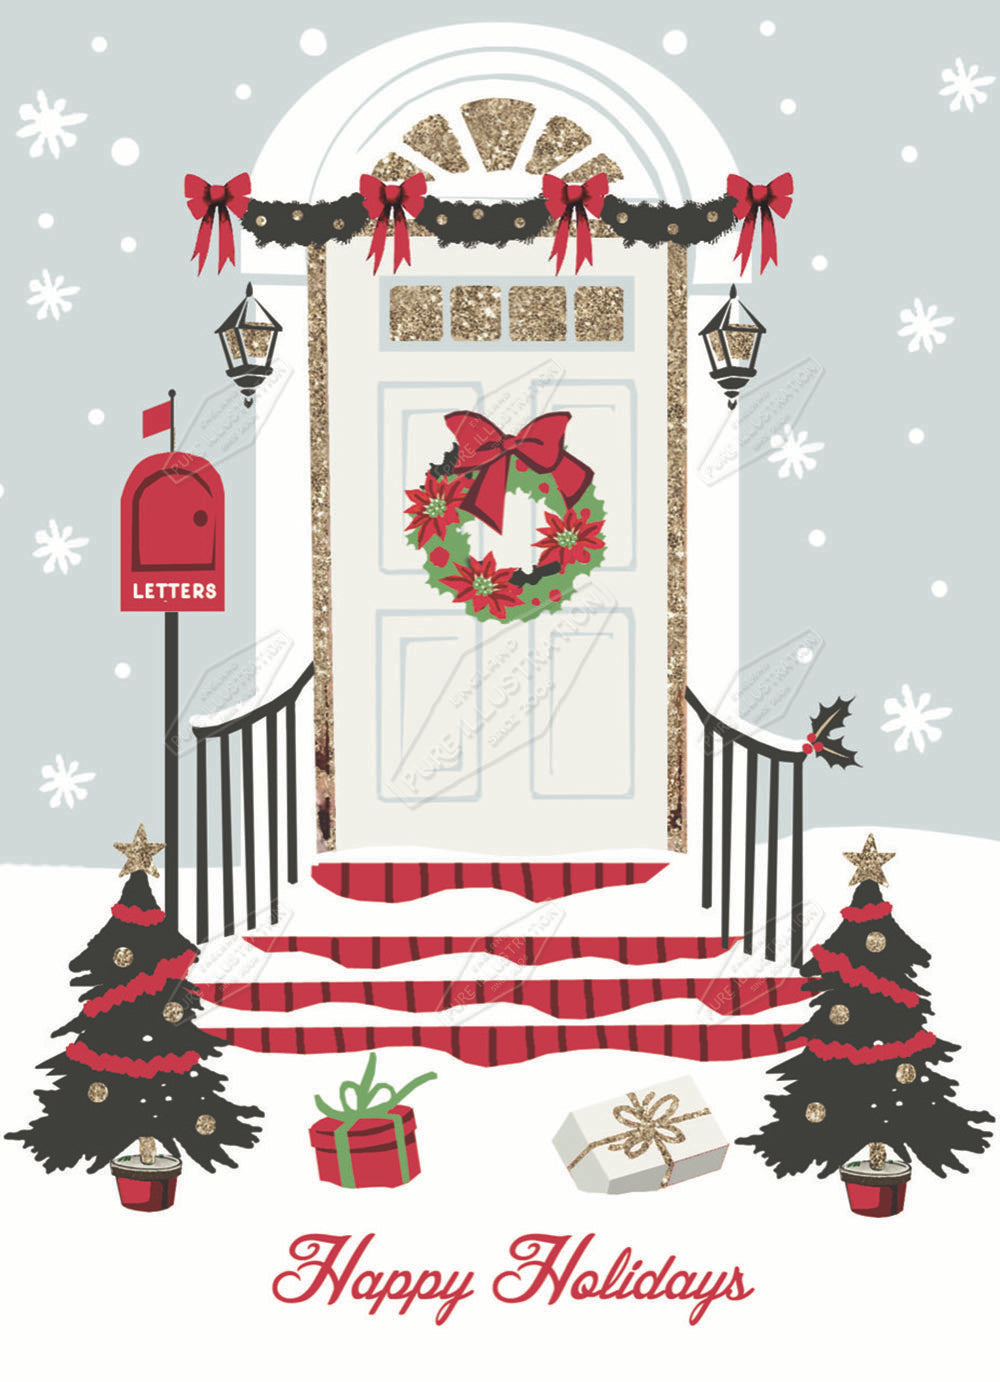 00032816DEV - Deva Evans is represented by Pure Art Licensing Agency - Christmas Greeting Card Design